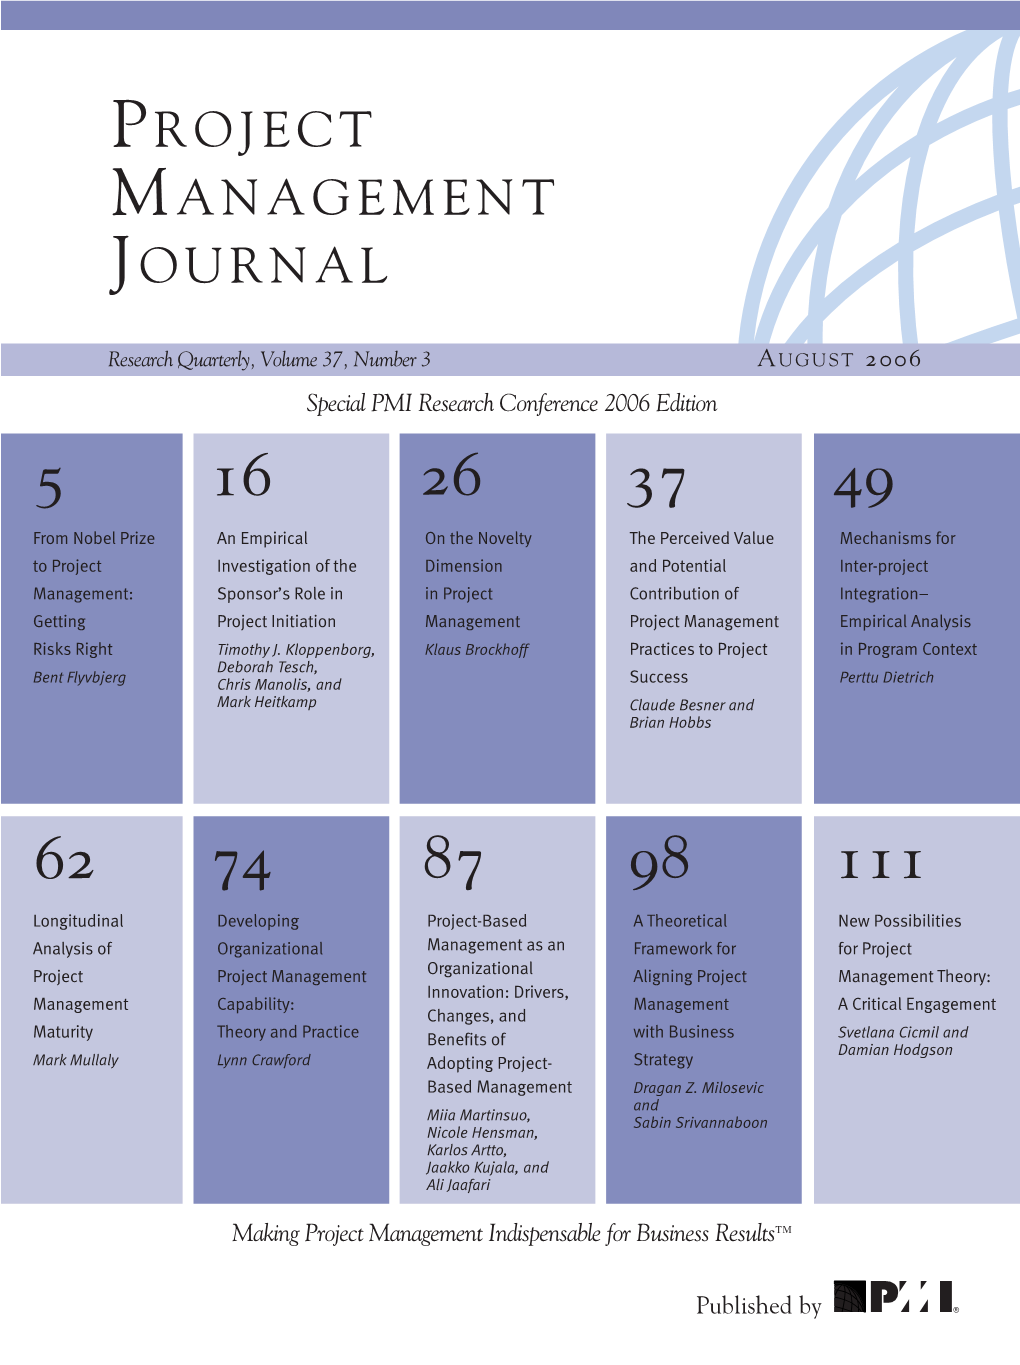 Project Management Journal